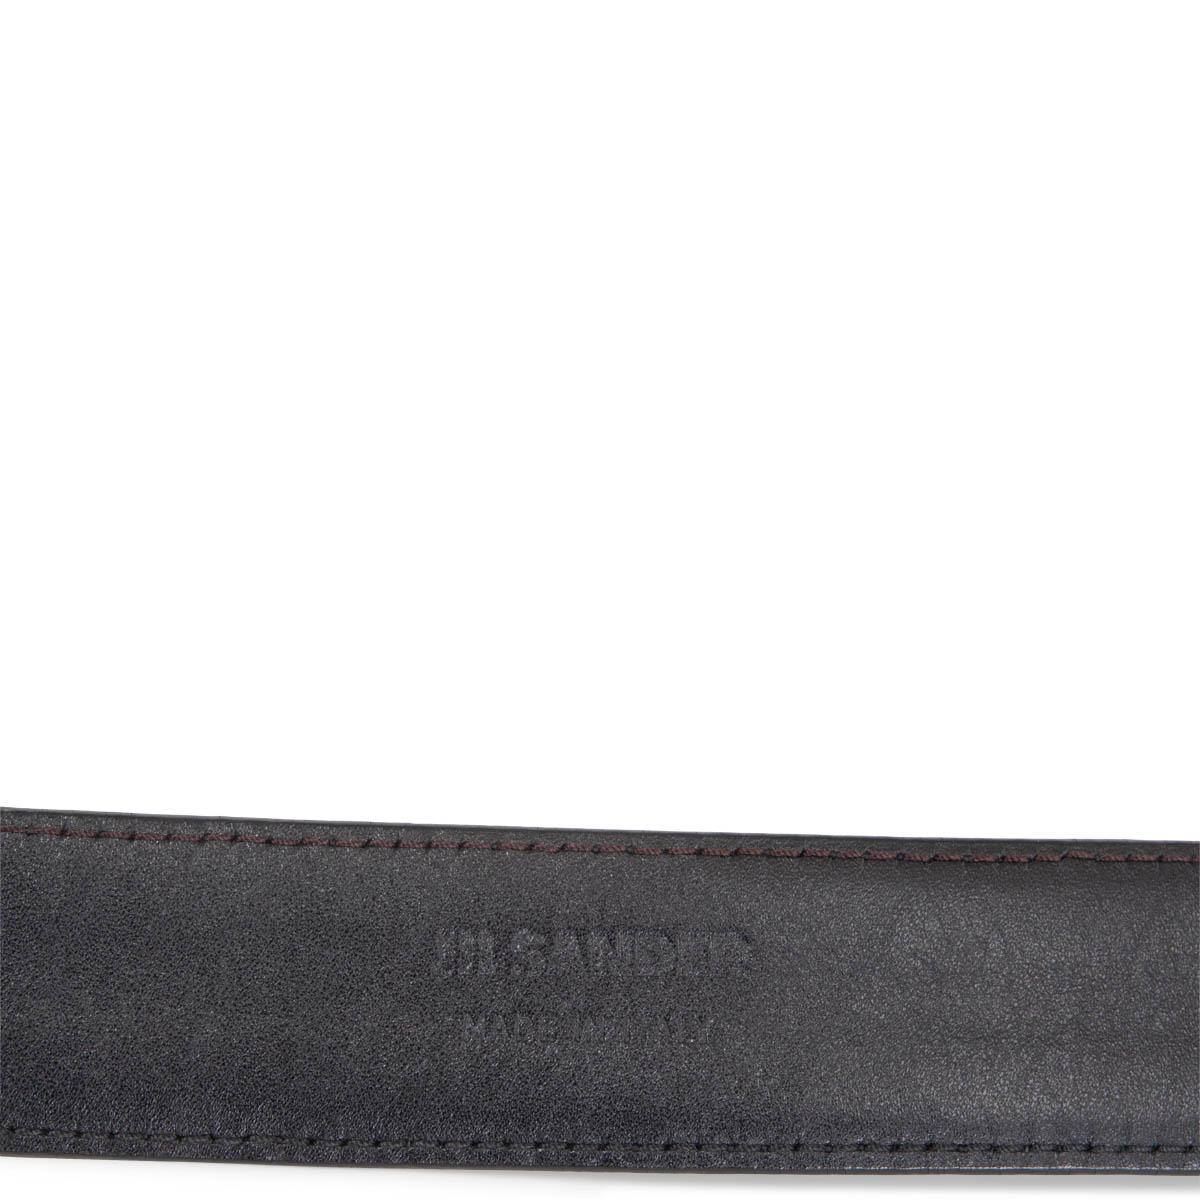 silver-toned buckle size 95 croc effect Jil Sander Jil Sander grey patent leather belt 